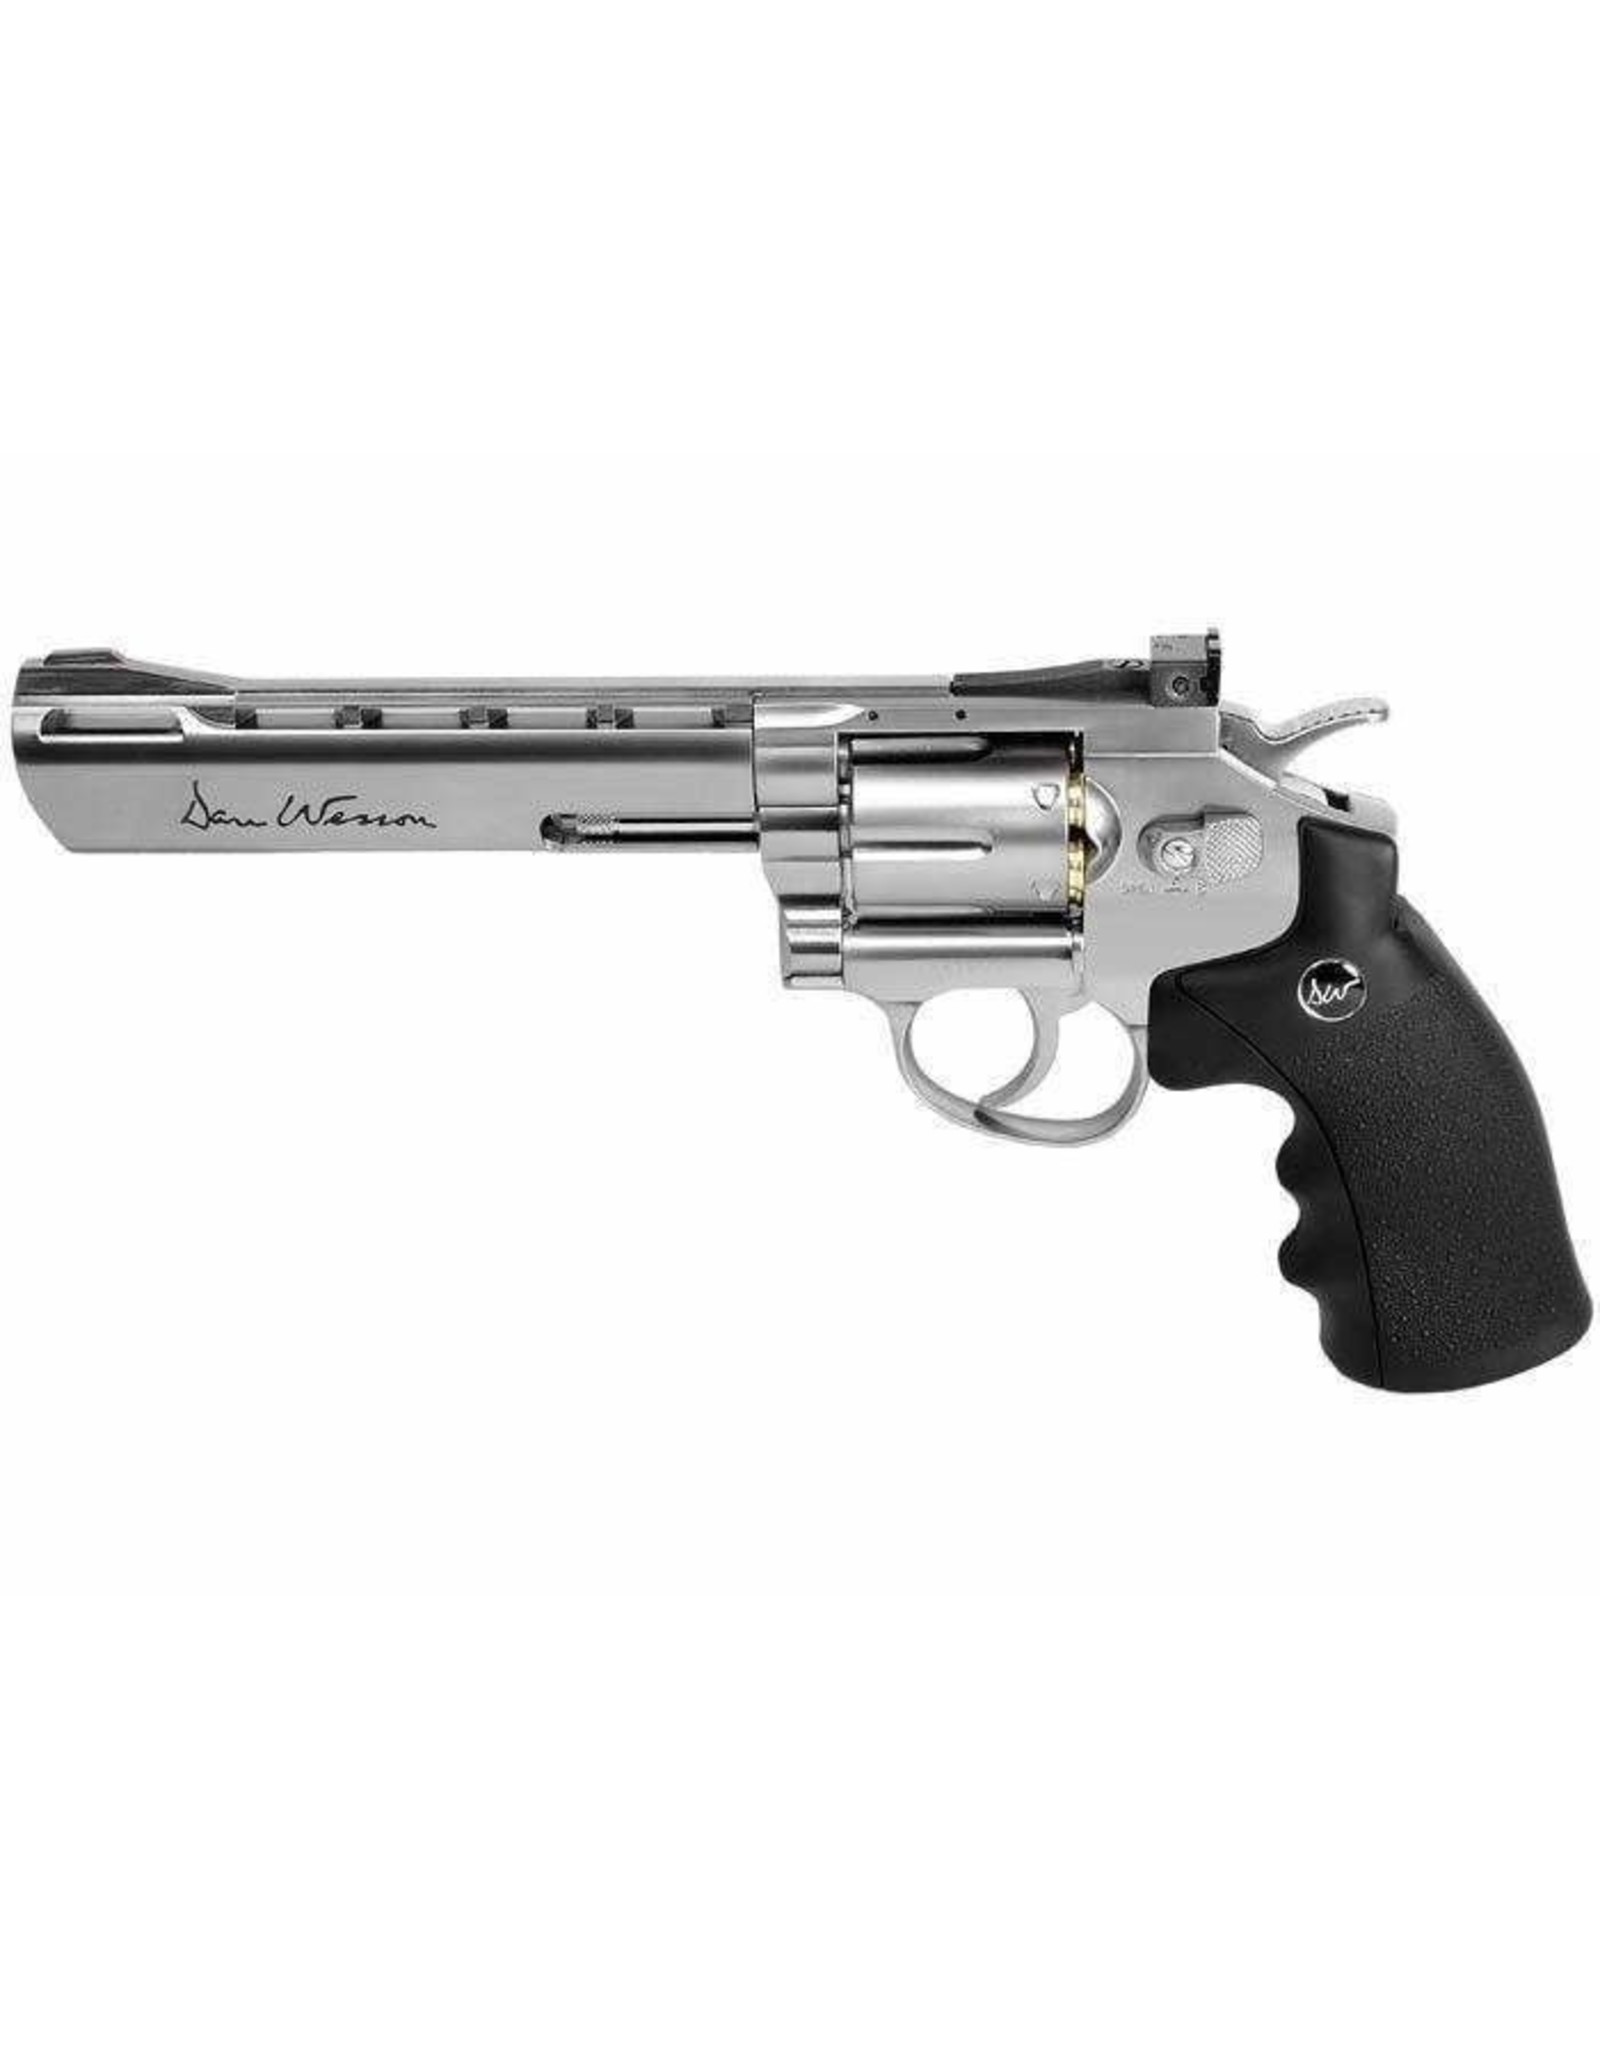 Dan Wesson Dan Wesson 6" c02 Pellet Revolver Speedloader, weaver rail .177